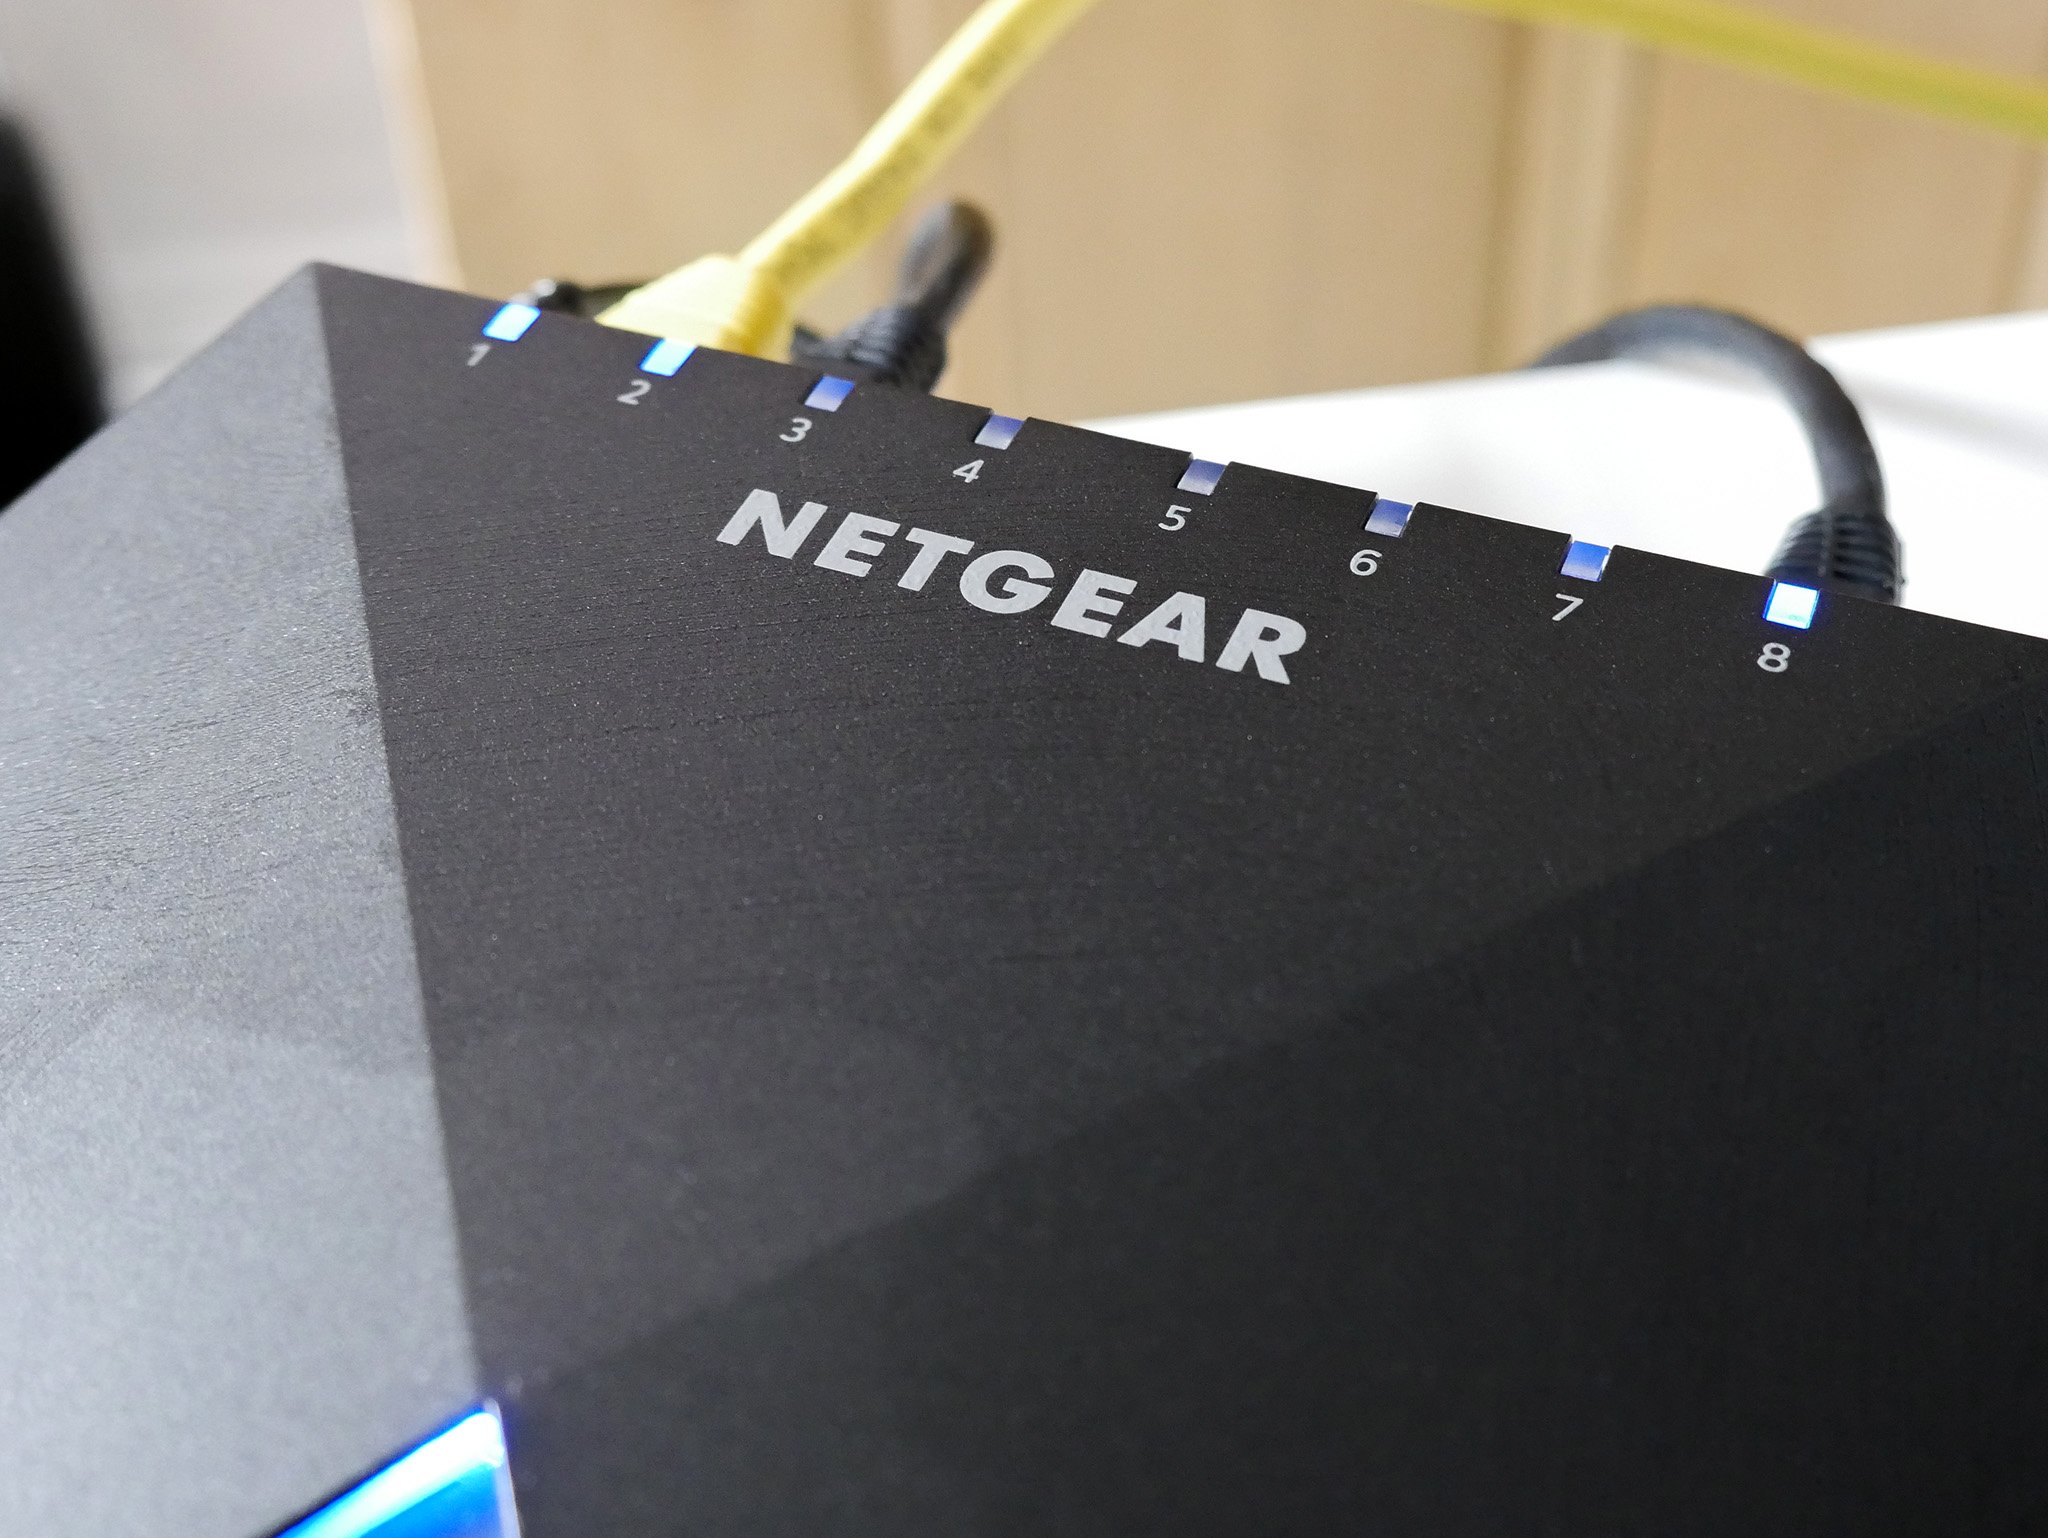 Netgear S8000